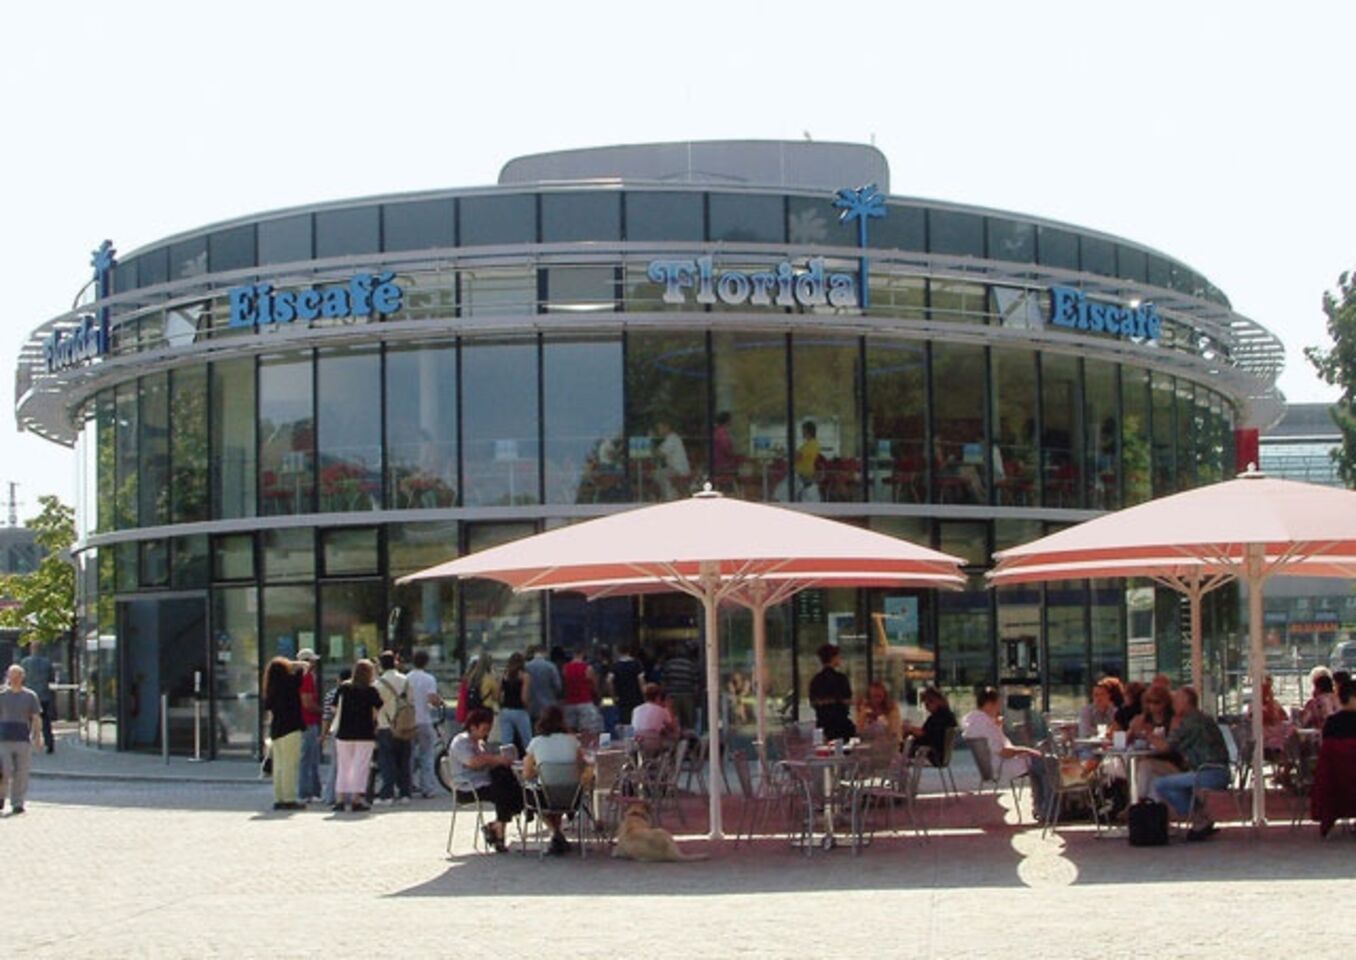 A photo of Florida Eiscafé, Altstädter Ring